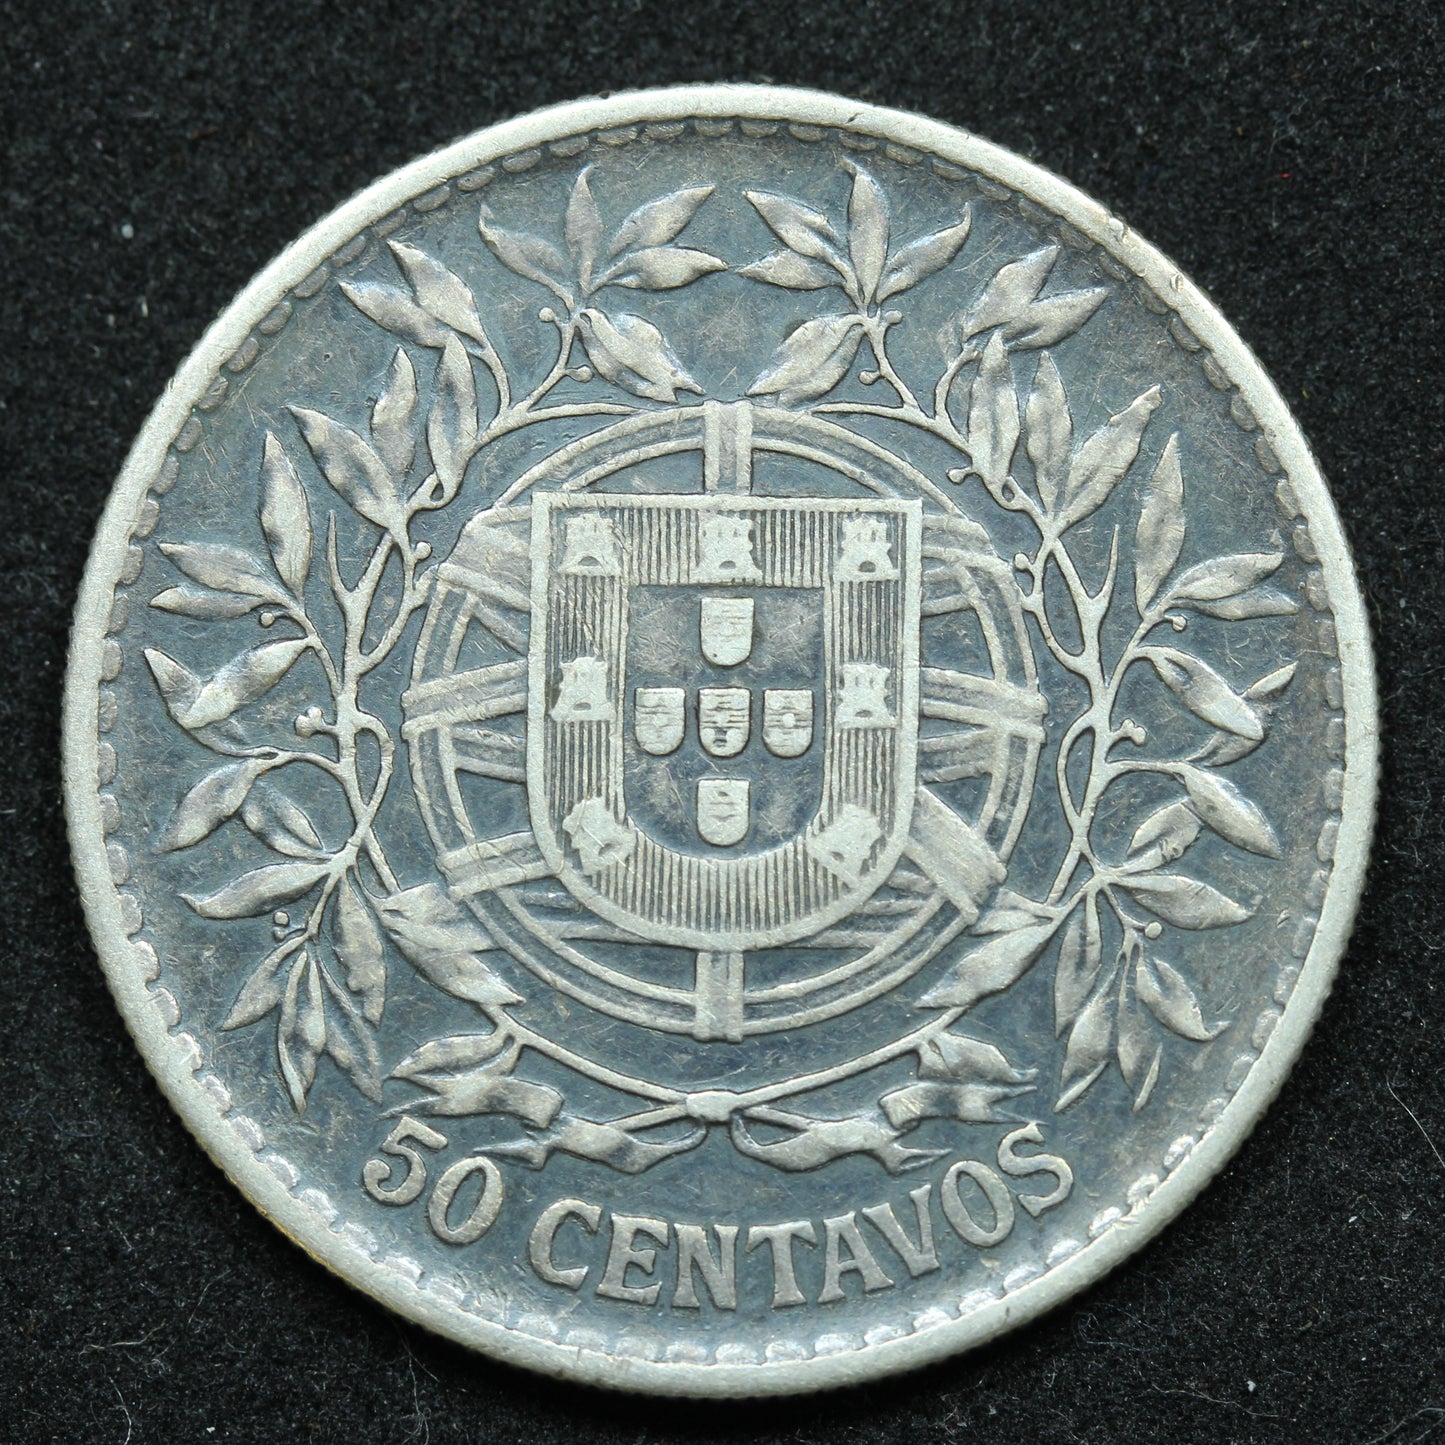 1912 50 Centavos Portugal Silver Coin -  KM# 561